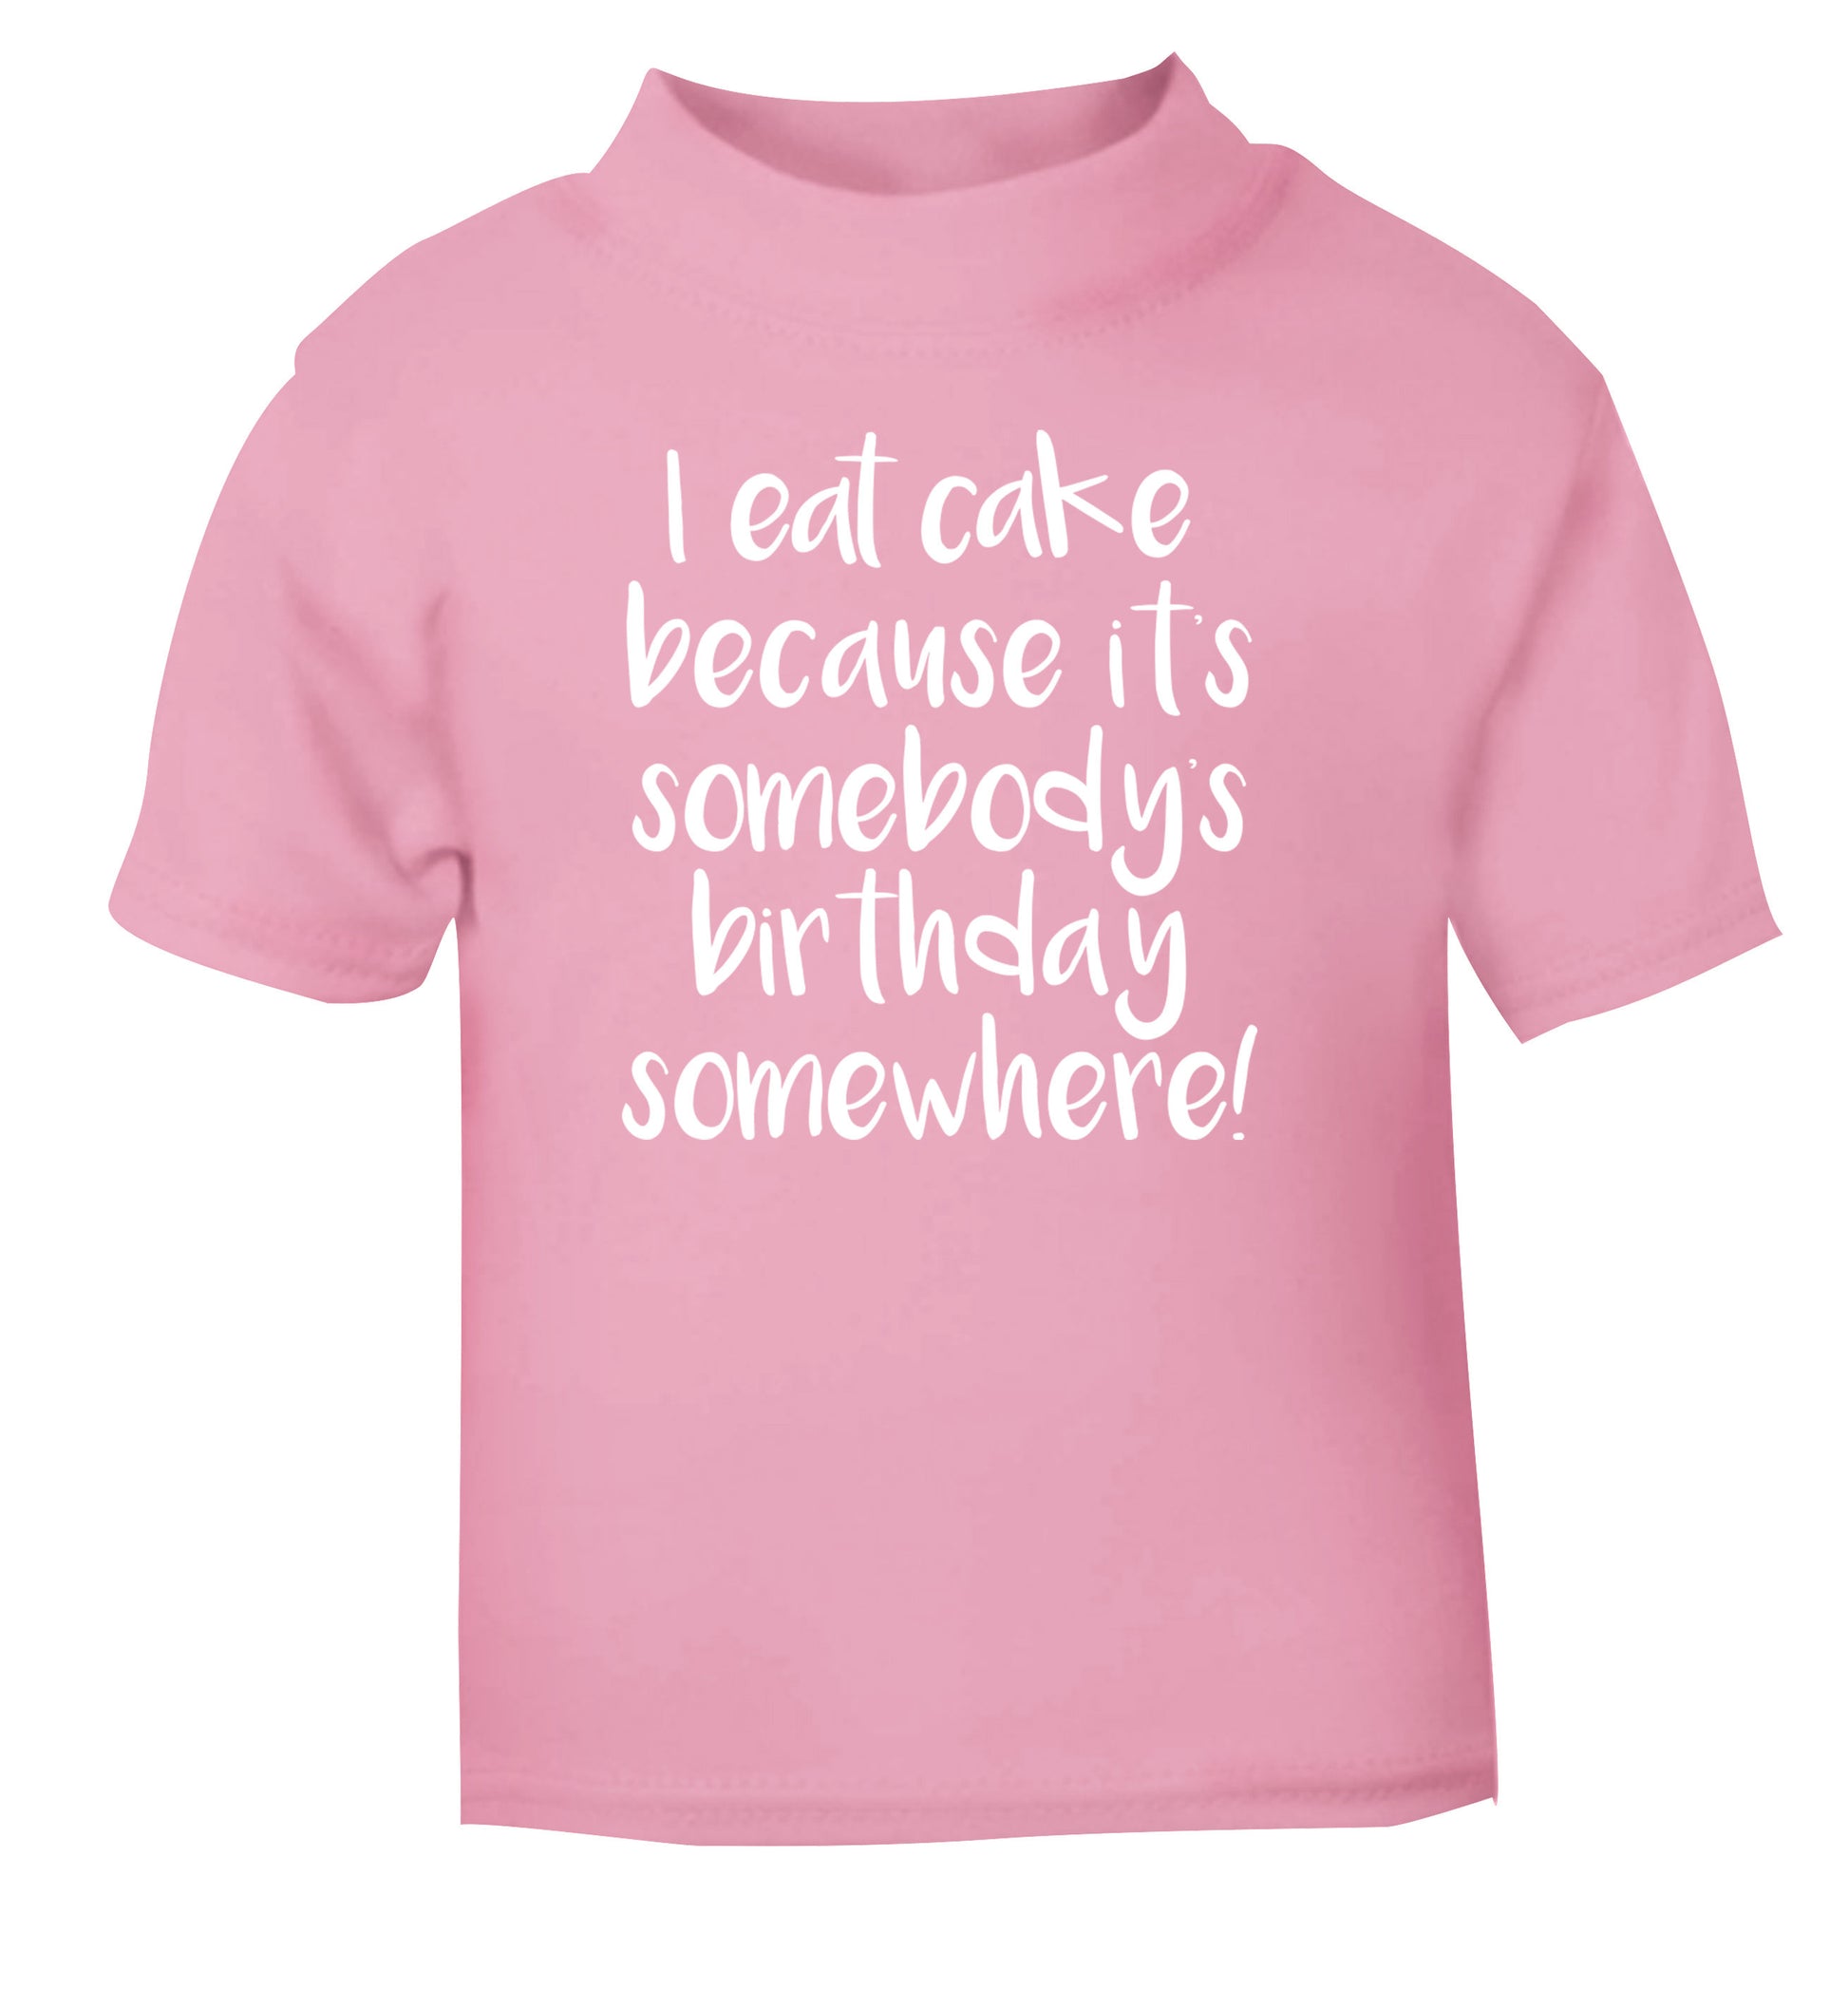 I eat cake because it's somebody's birthday somewhere! light pink Baby Toddler Tshirt 2 Years